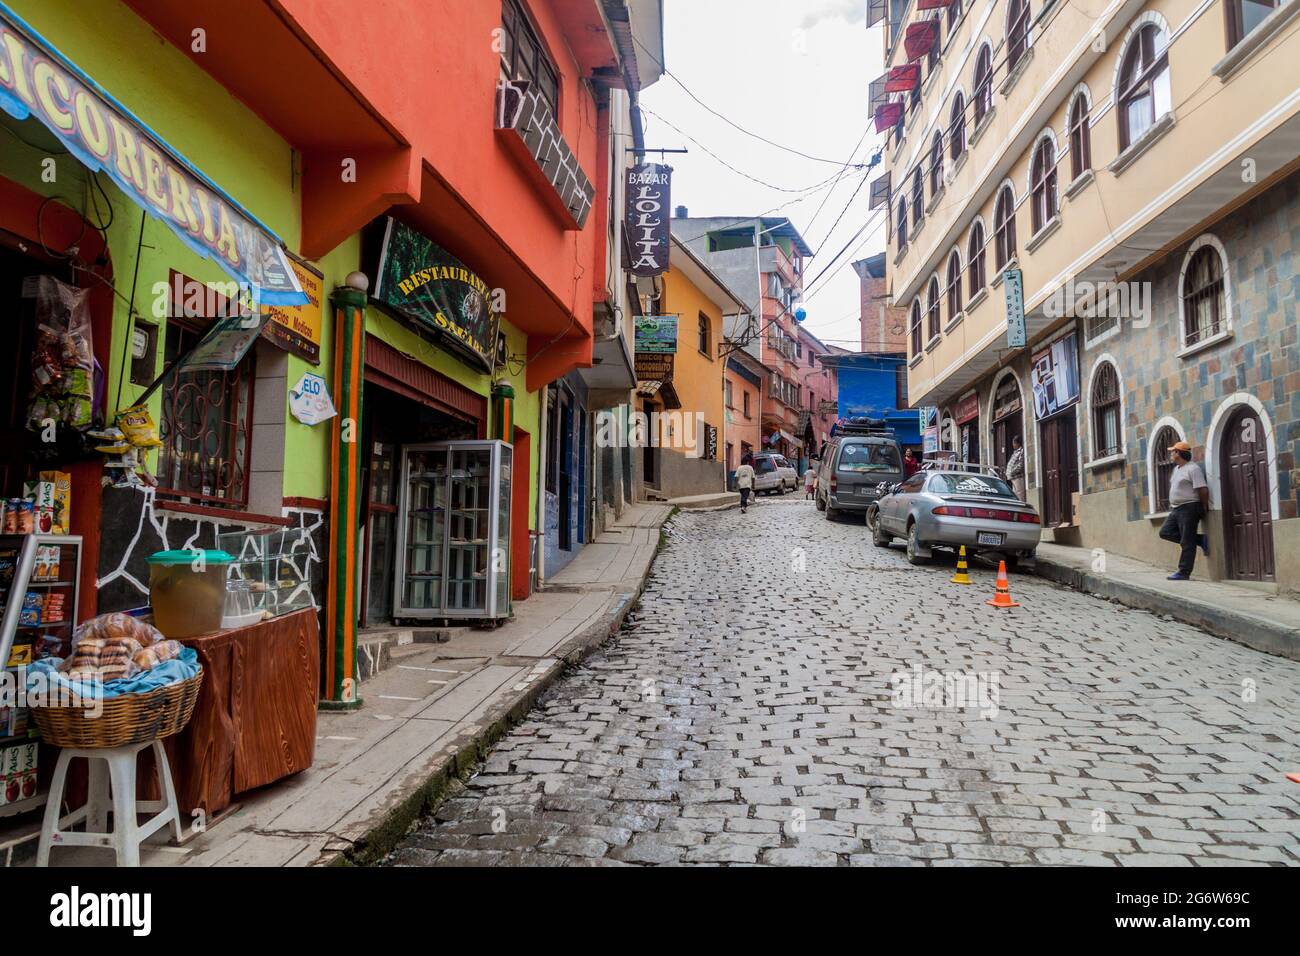 COROICO, BOLIVIA - APRIL 30, 2015: View of a street in Coroico, Bolivia Stock Photo